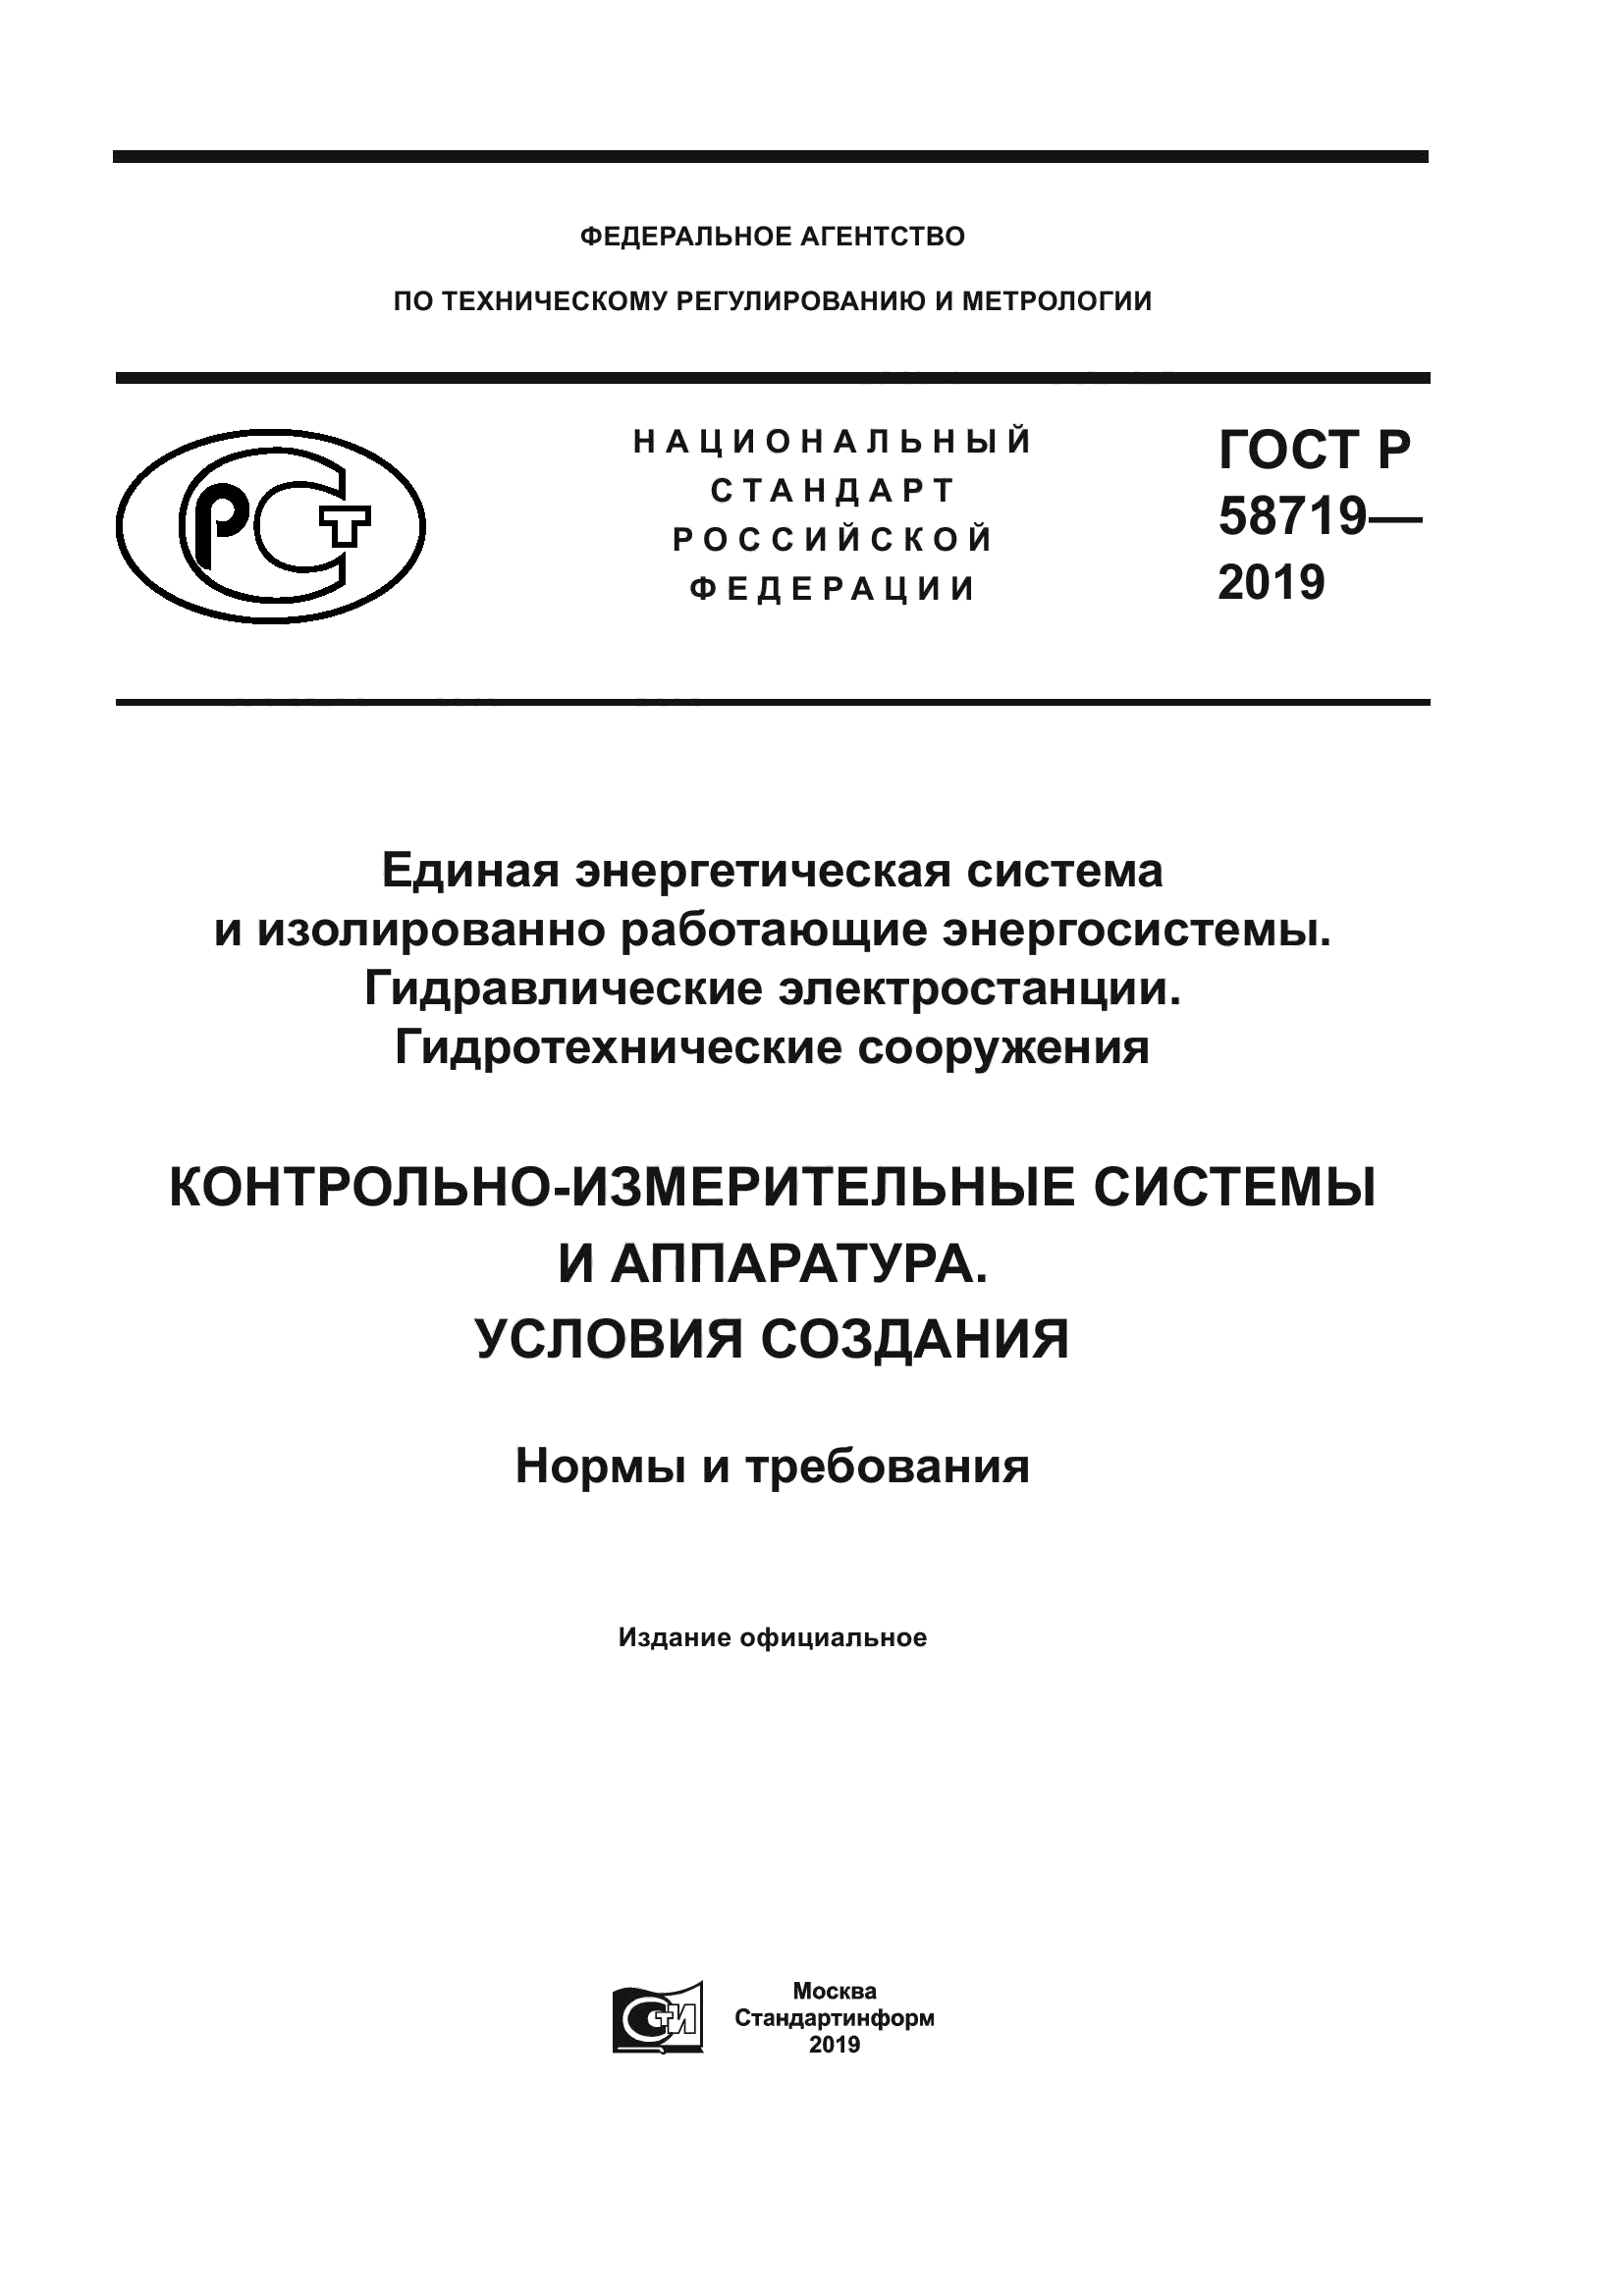 ГОСТ Р 58719-2019